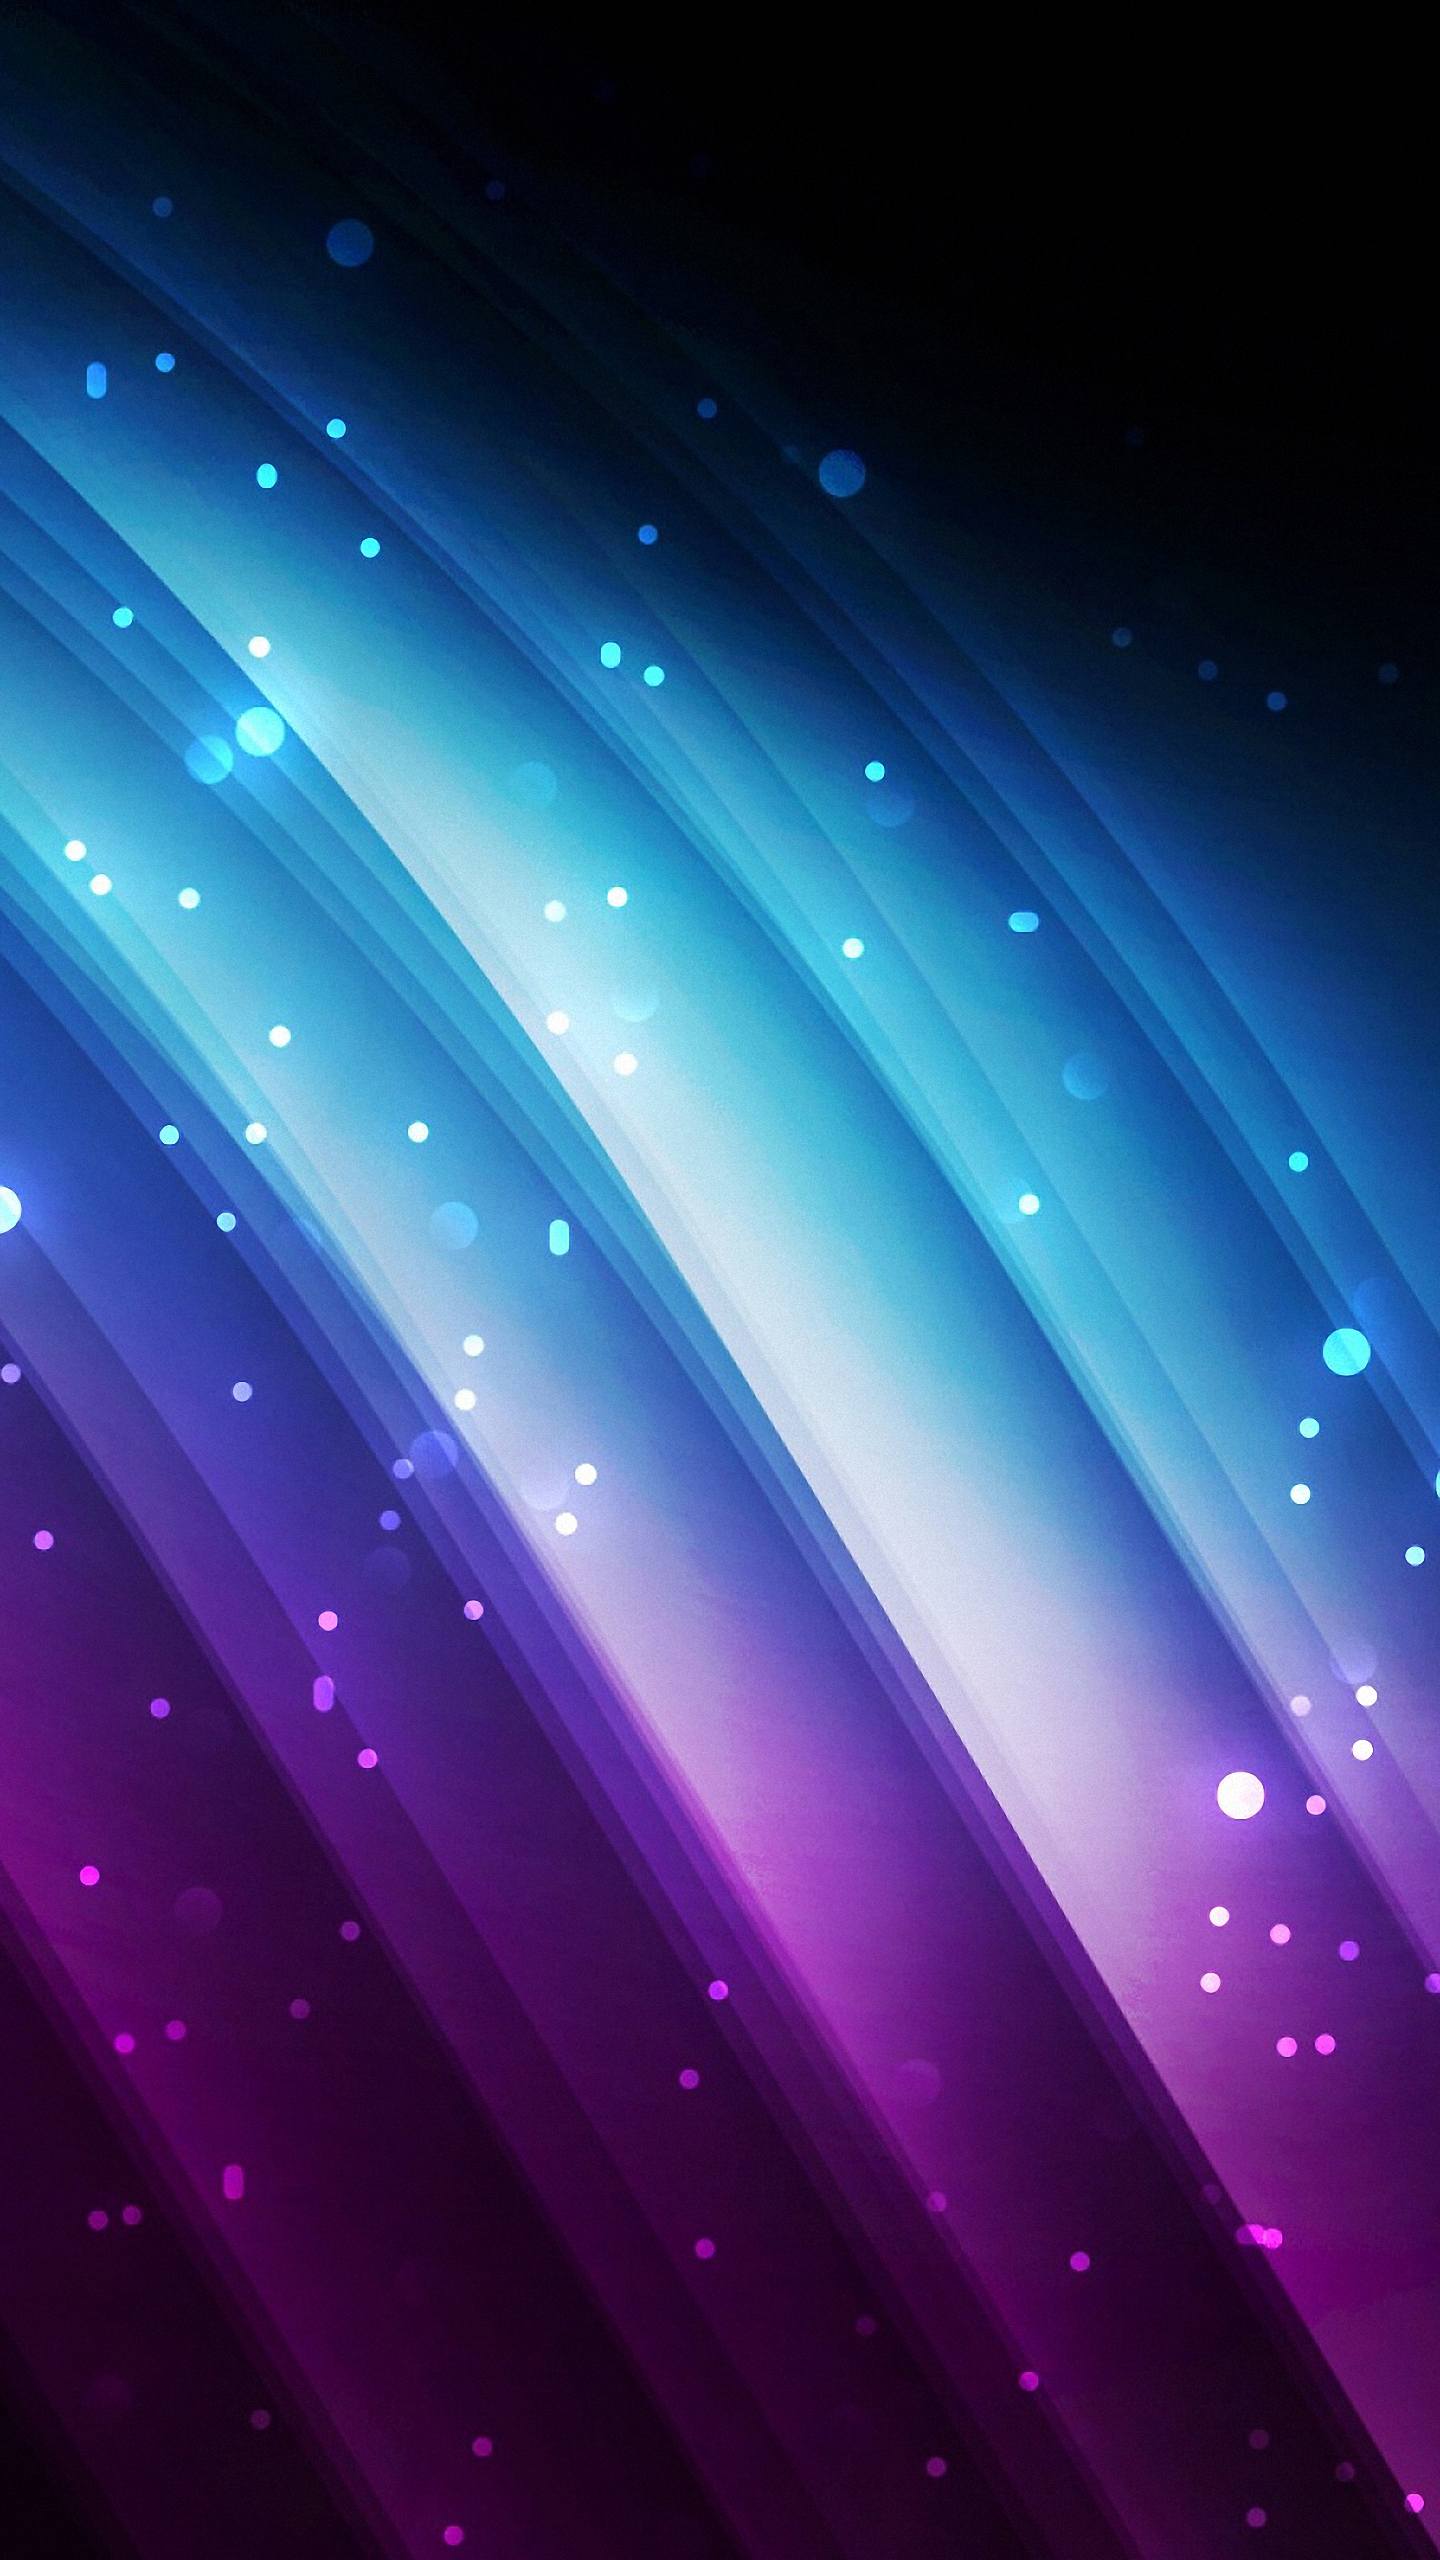 iphone wallpapers hd descarga gratuita,azul,violeta,cielo,púrpura,ligero